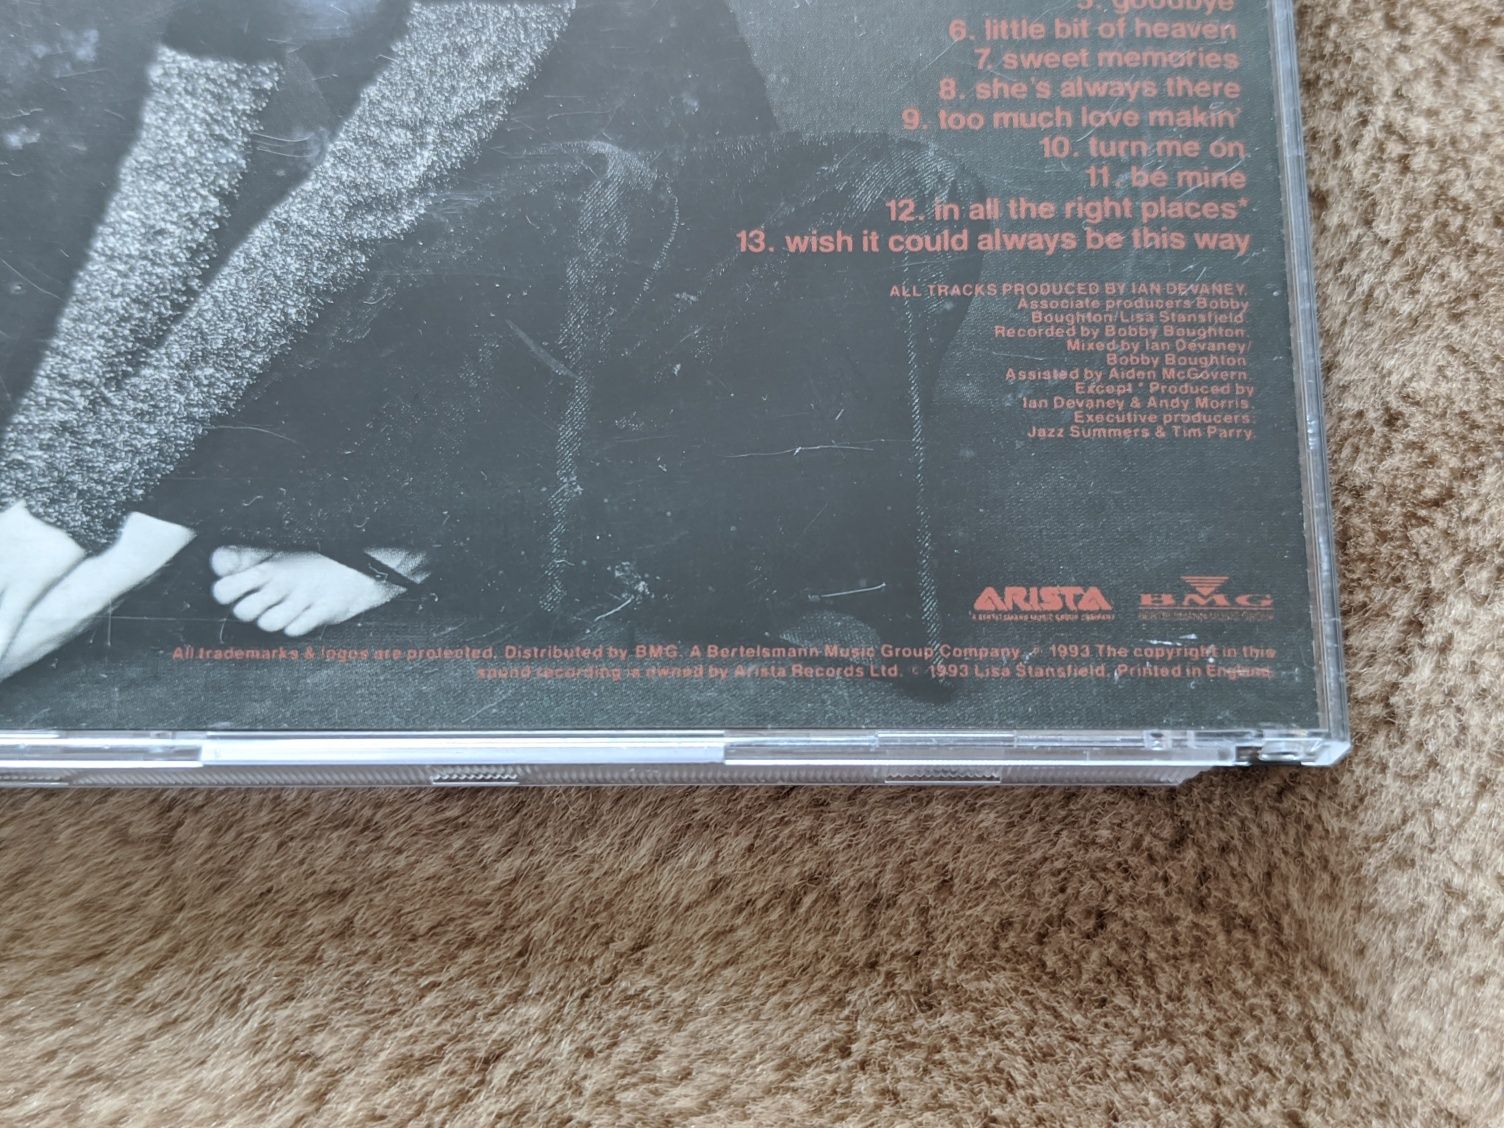 Фирменный CD Lisa Stansfield - So Natural